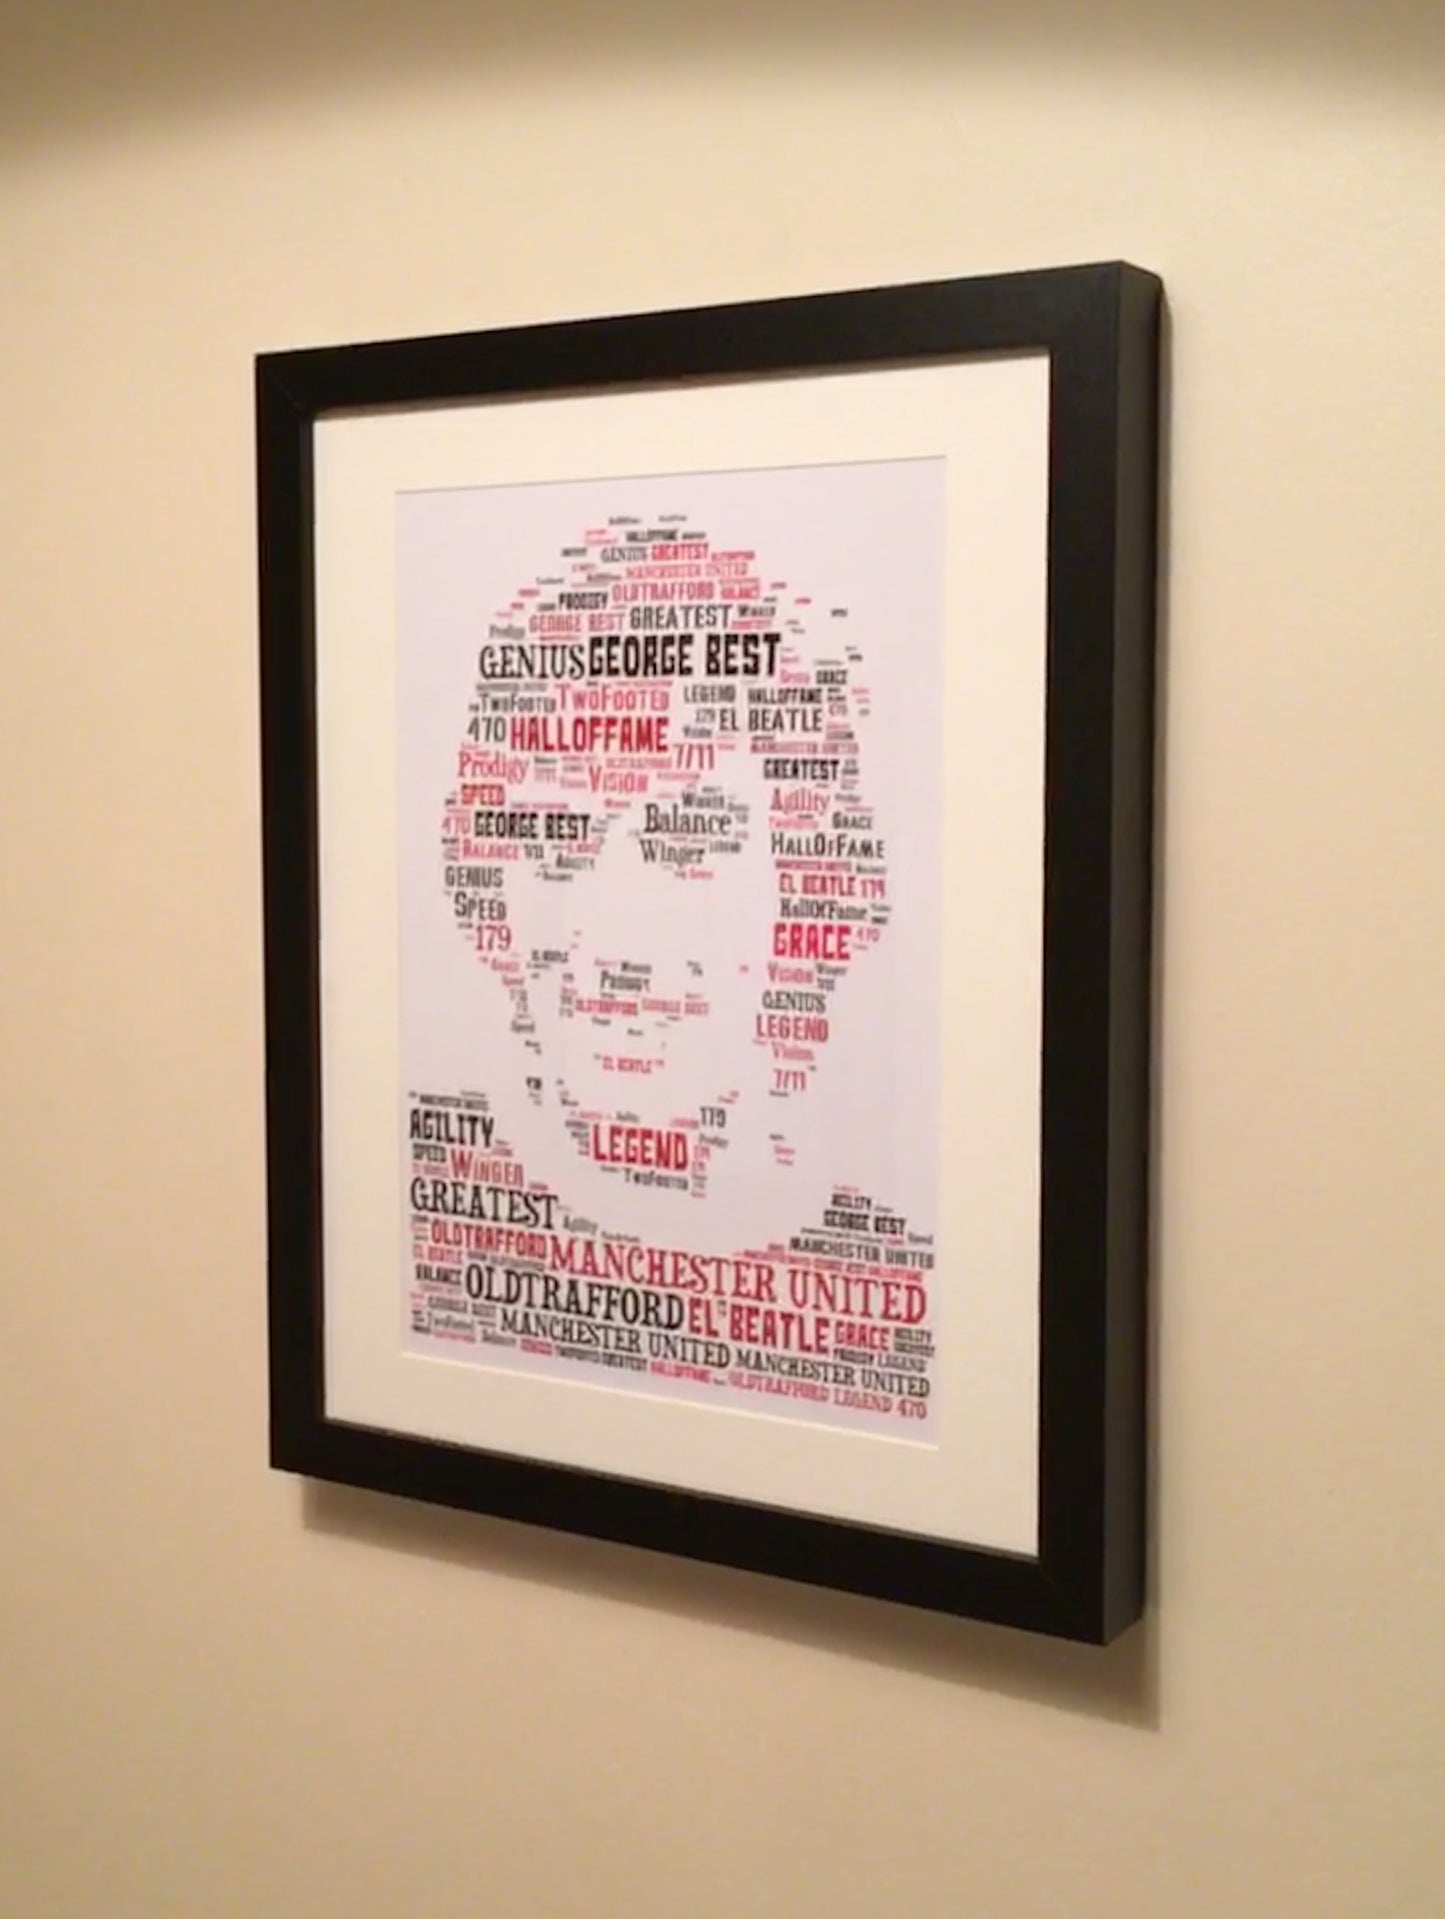 George Best Man Utd Football Legend - Typography Portrait in words print